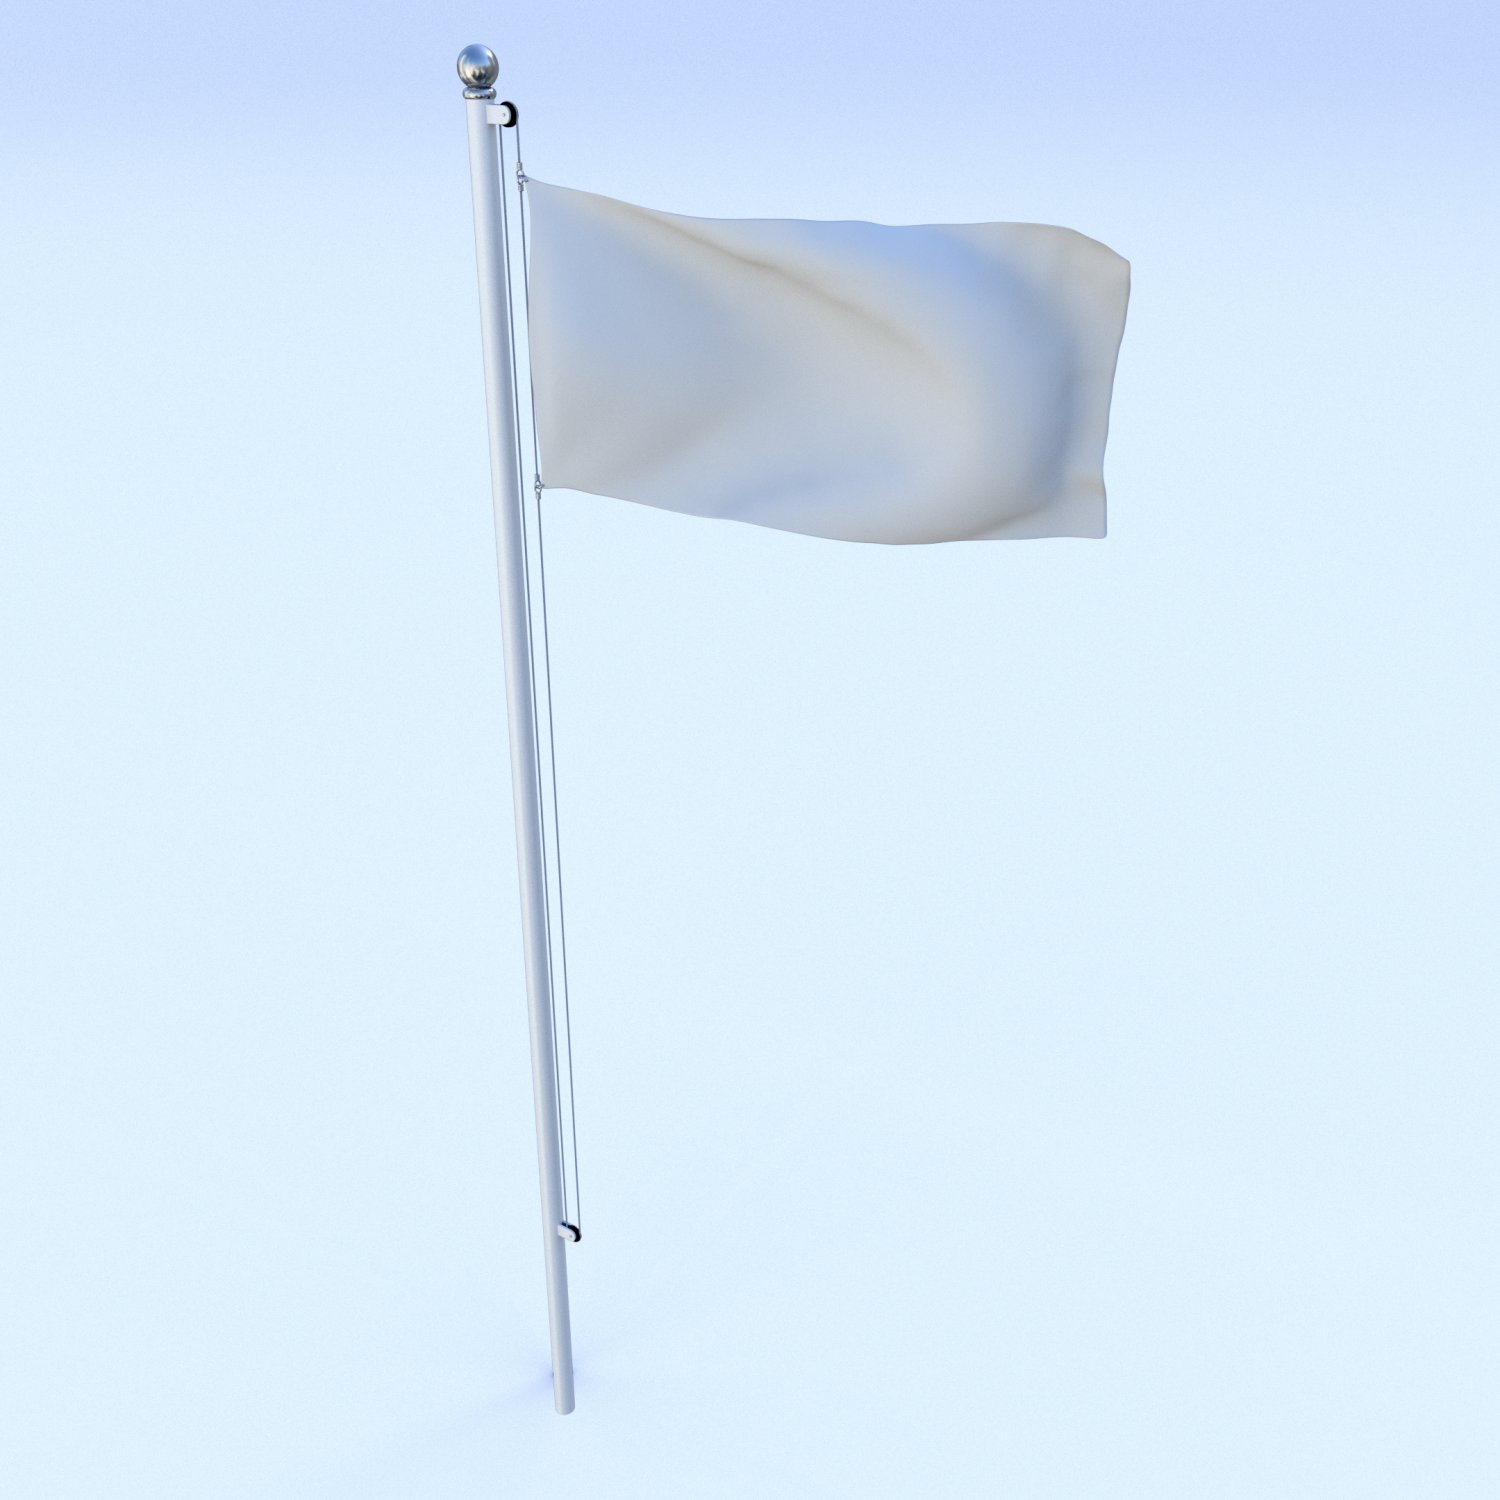 crotia flag animation